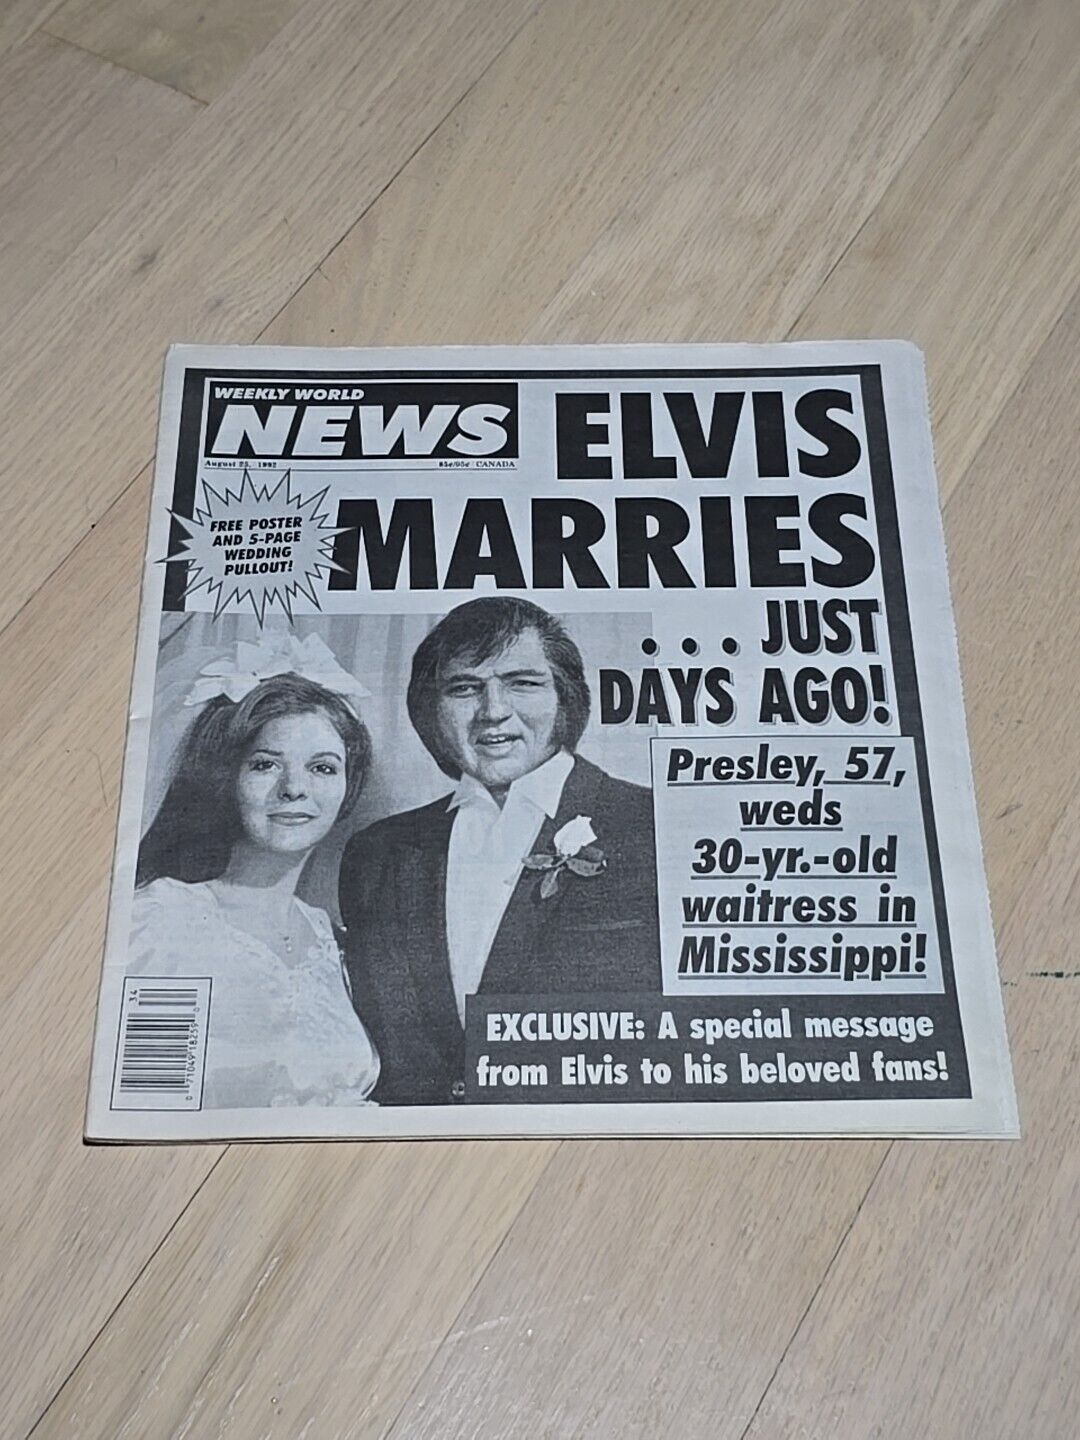 VINTAGE Weekly World News August 1992 Tabloid -  Elvis Presley Marries Waitress